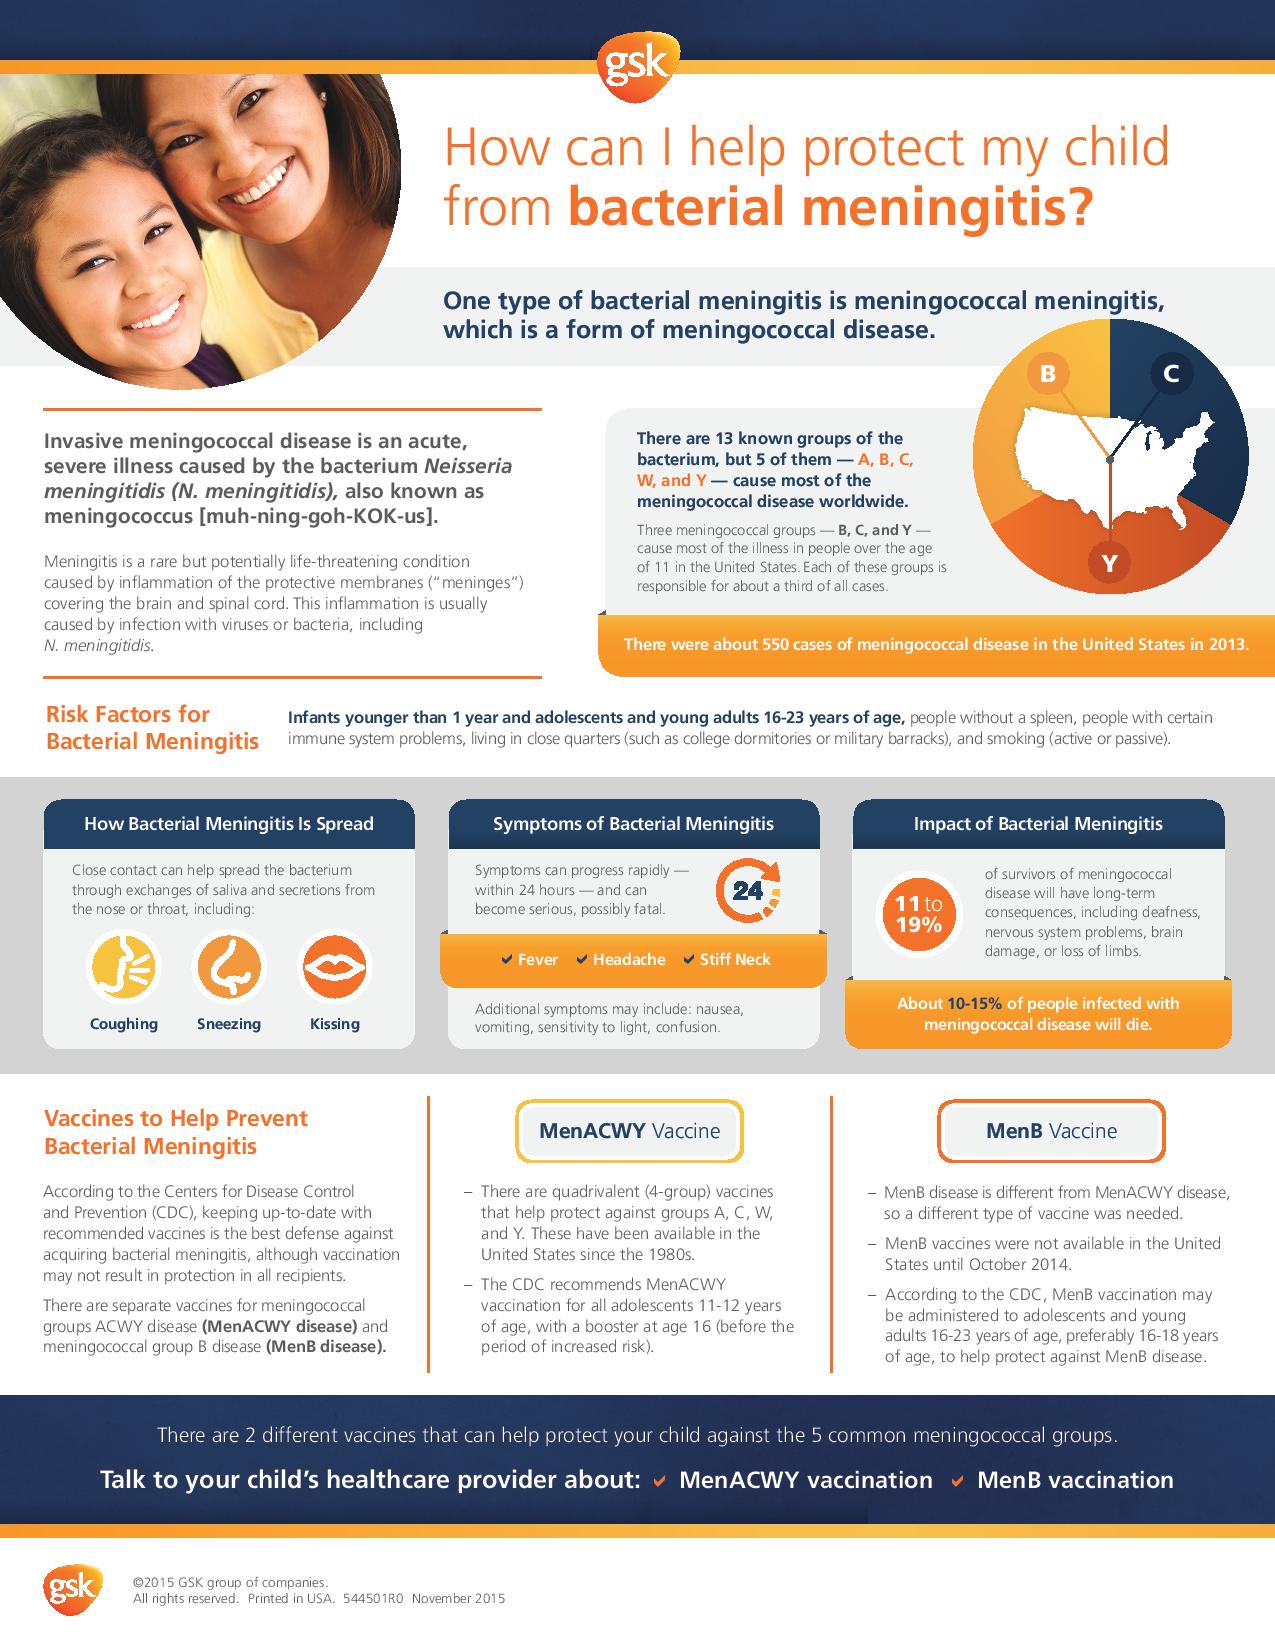 How can I help protect my child against meningitis